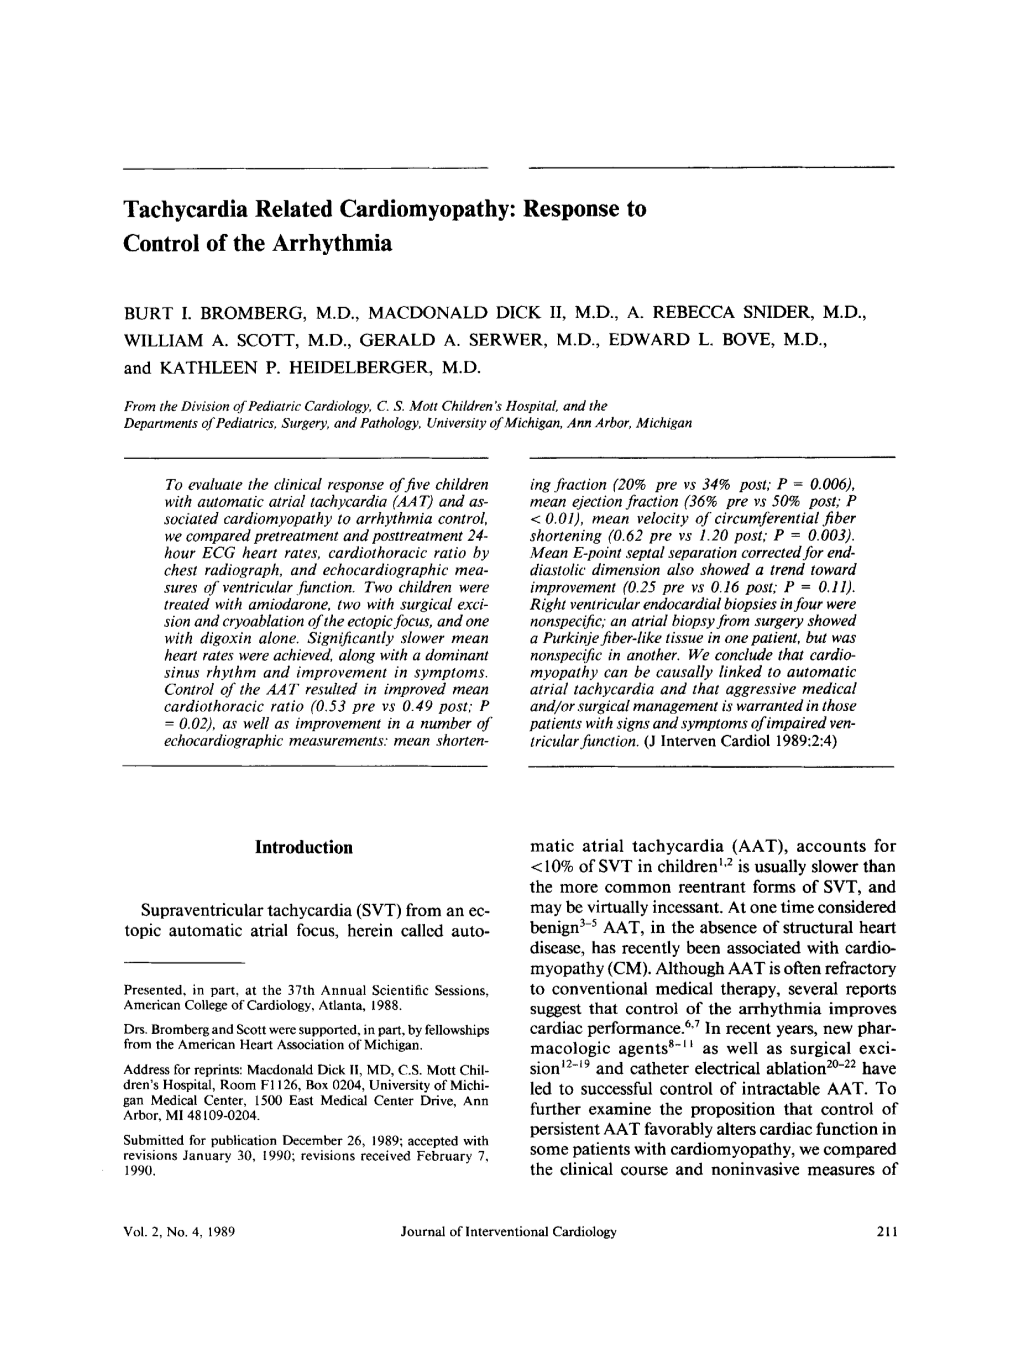 Tachycardia Related Cardiomyopathy: Response to Control of the Arrhythmia